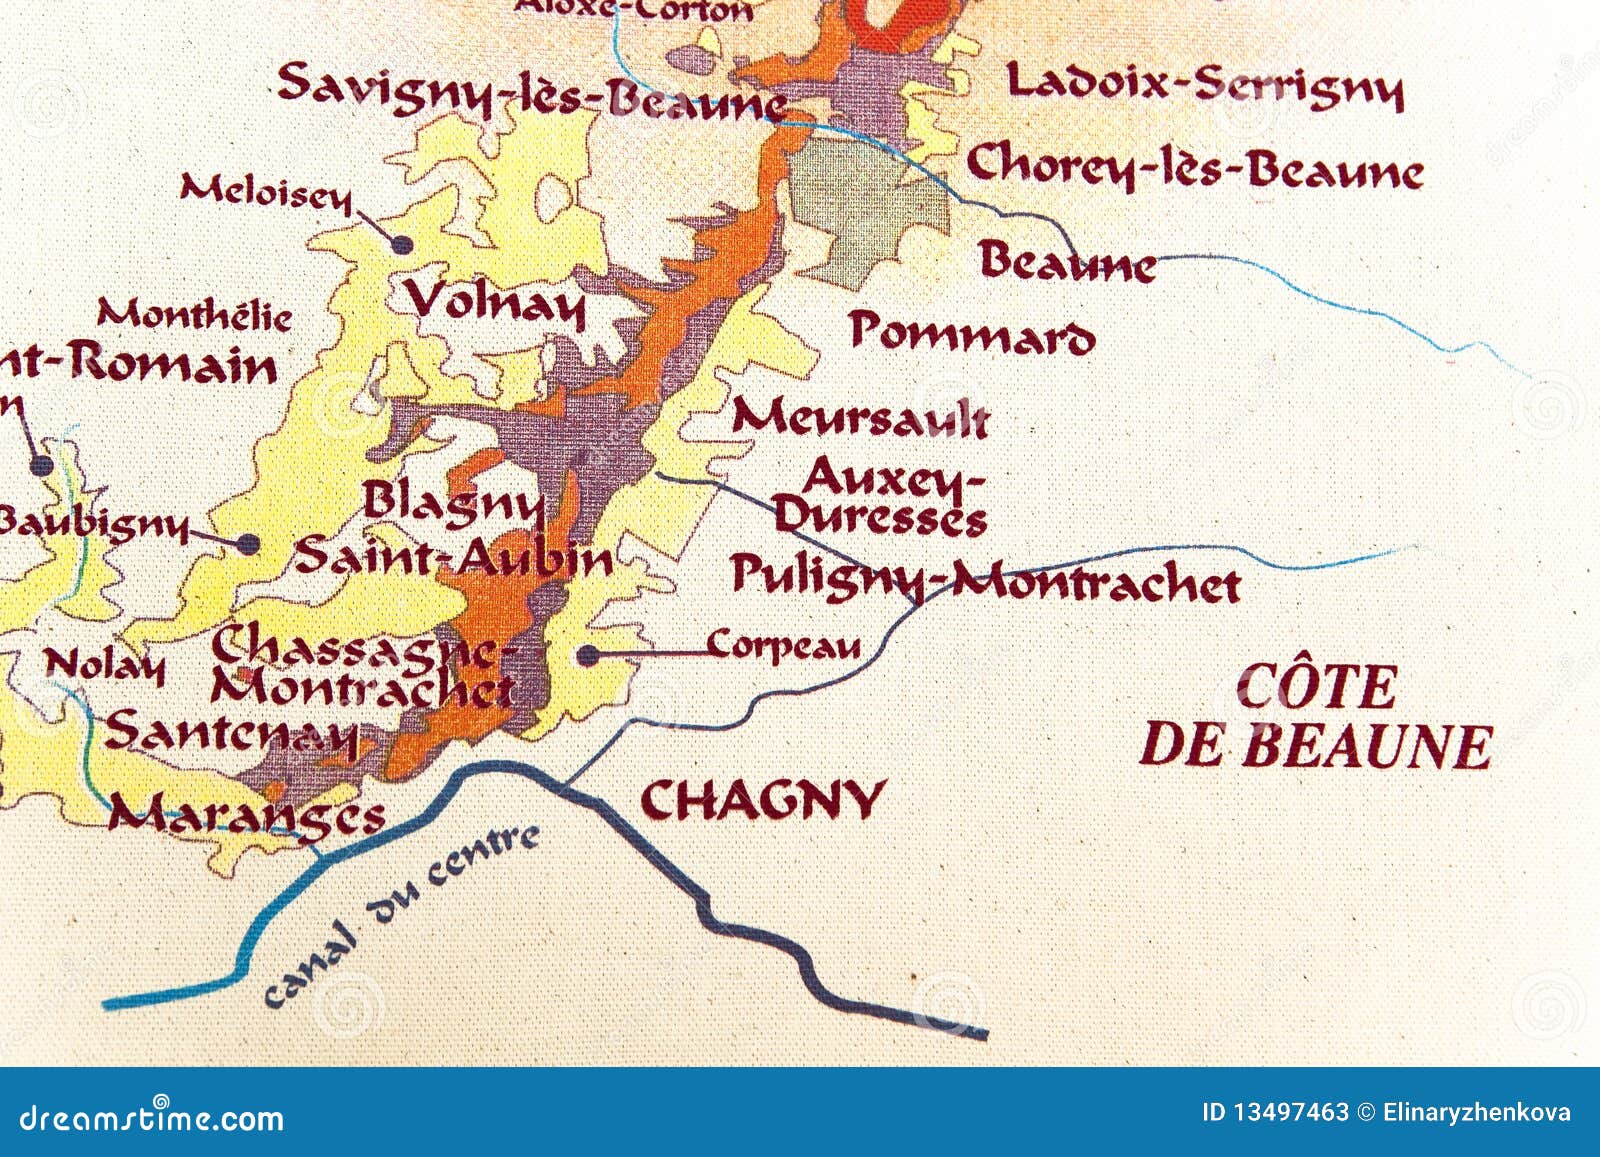 Burgundy Wine Region Map